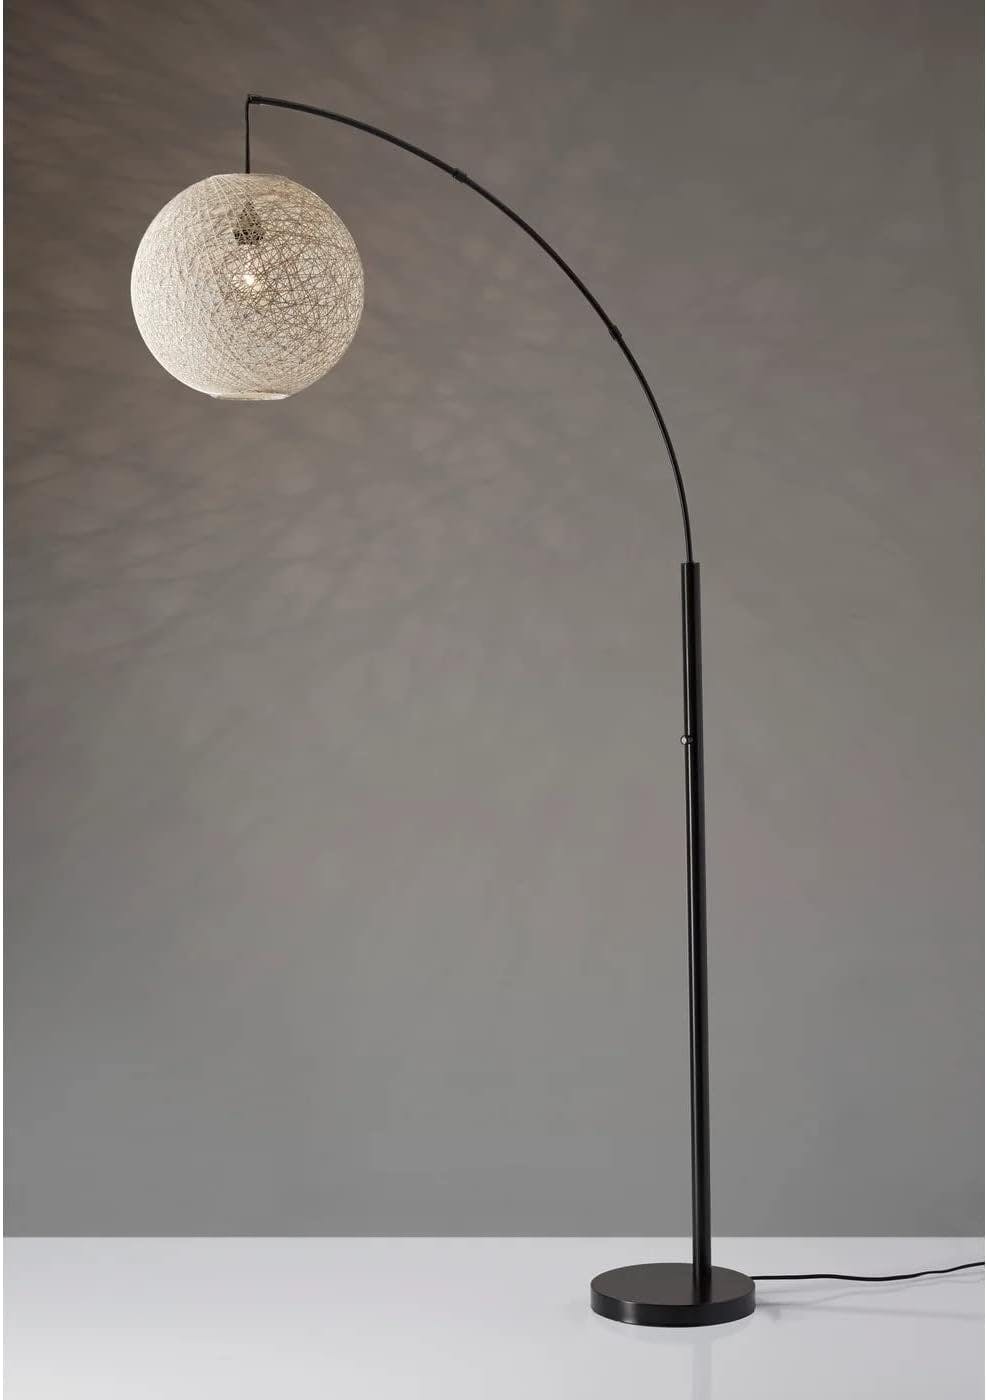 Cristobal 76.5" Natural/Bronze Arched Floor Lamp